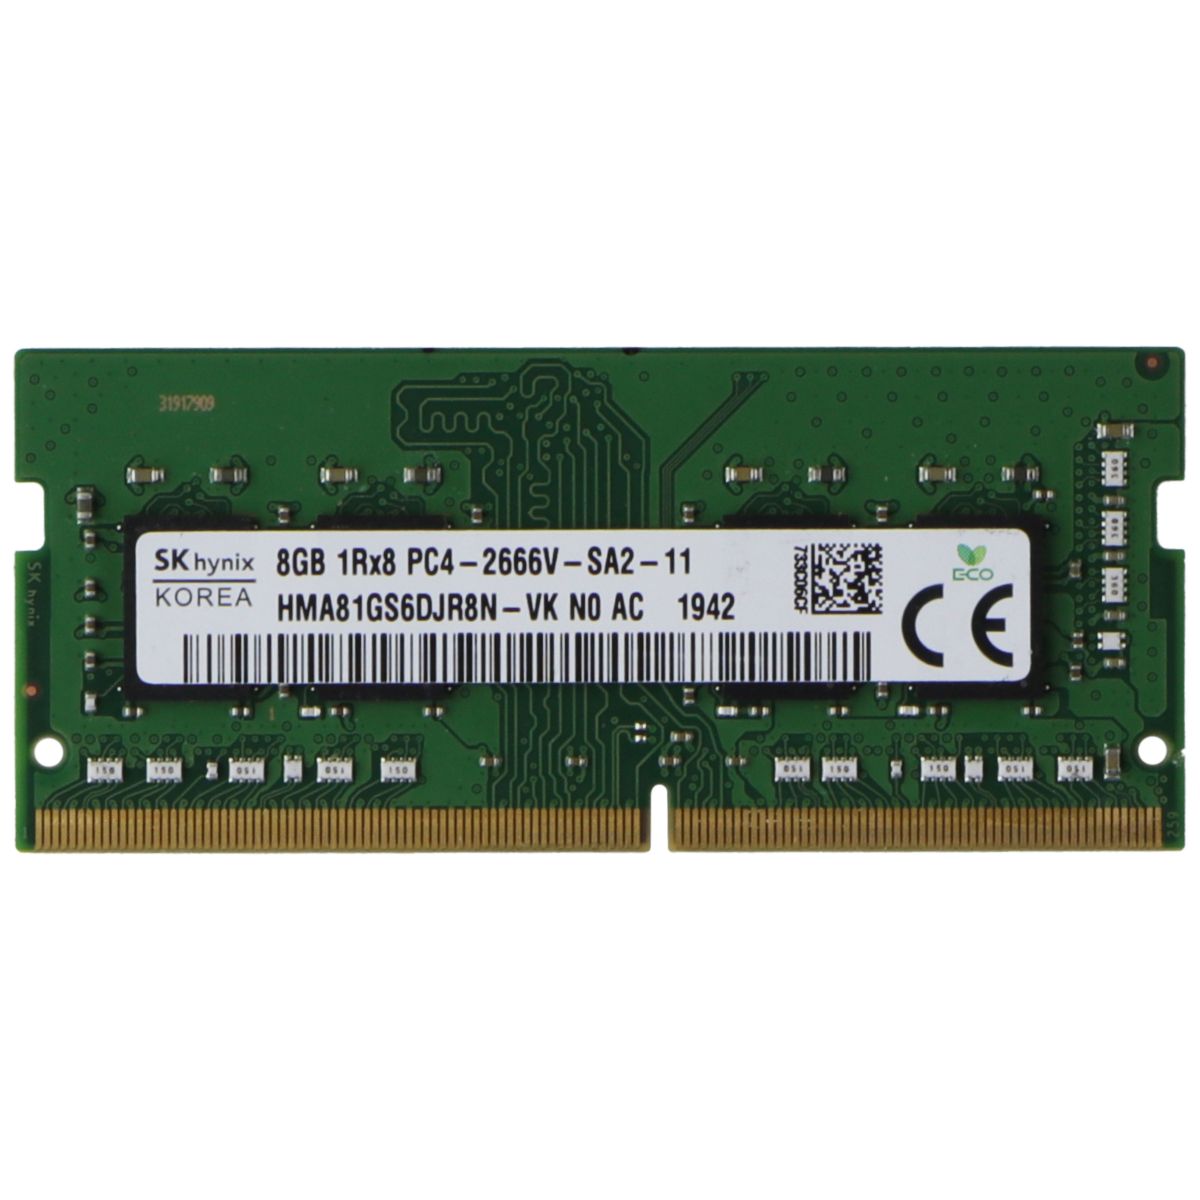 SK Hynix (8GB) DDR4 1Rx8 (PC4-2666V) Laptop RAM Memory HMA81GS6DJR8N-VK NO AC